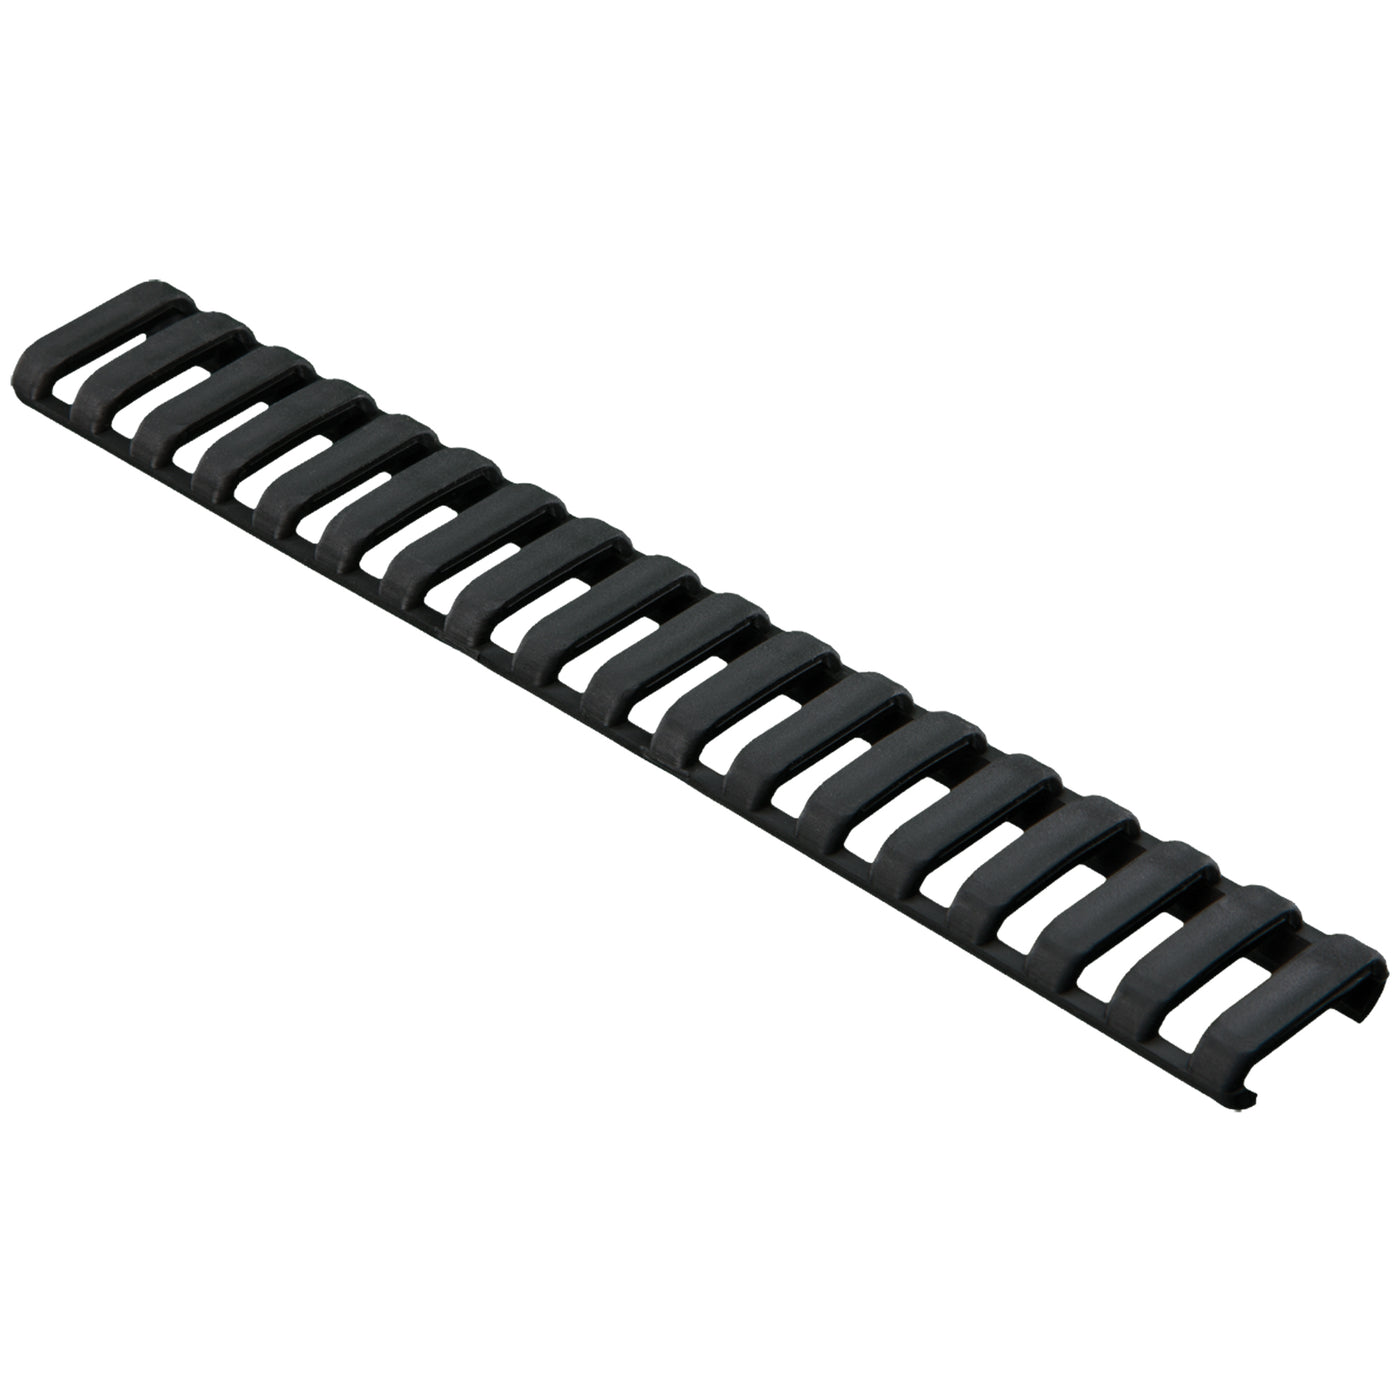 Magpul Rail Panels Ladder - Fits Picatinny Rails Black